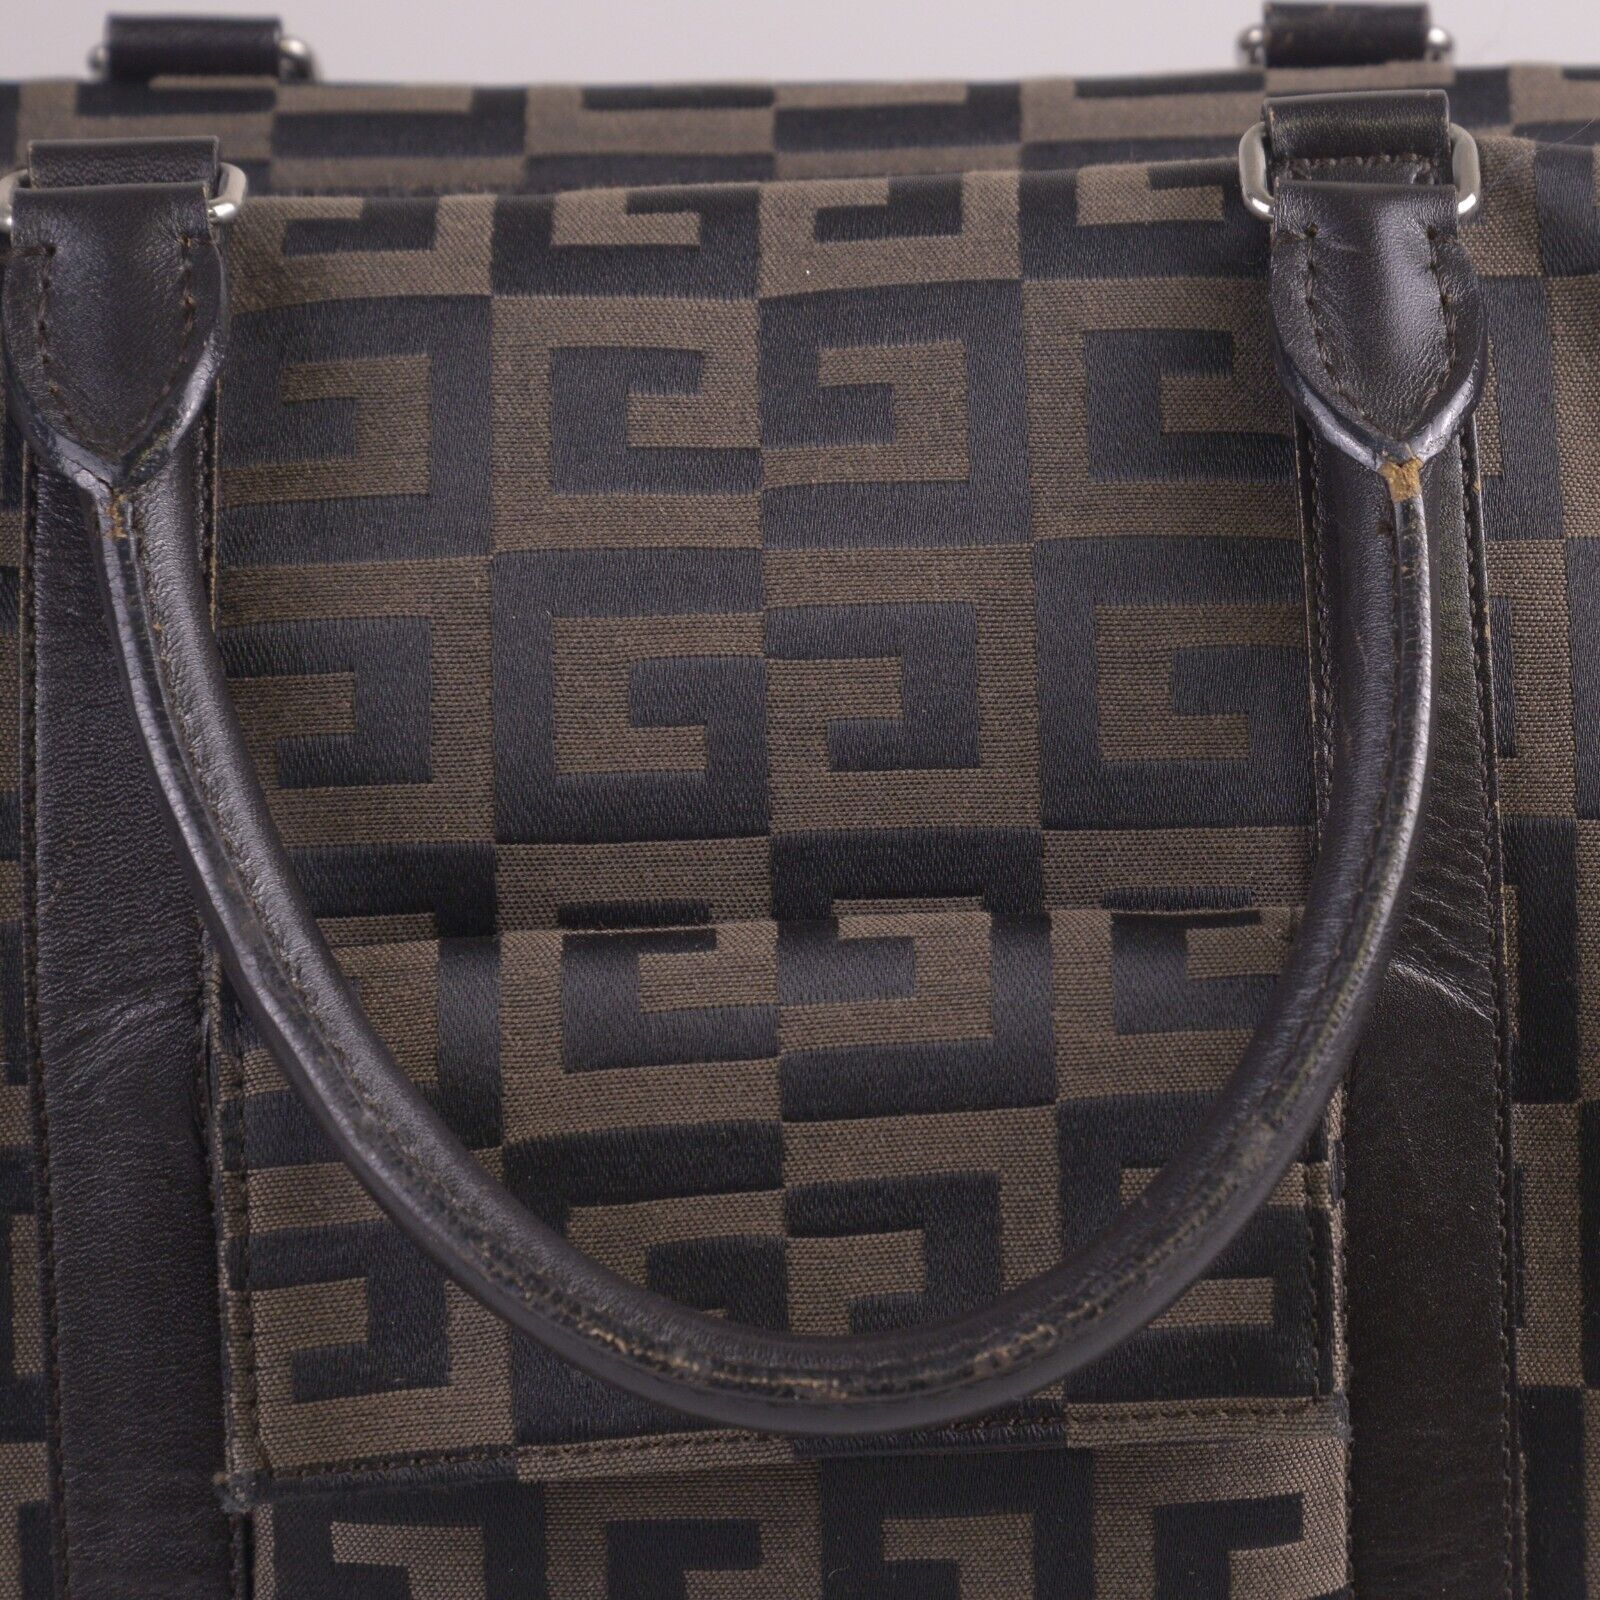 Givenchy Maroquinerie Monogram Boston Duffle Bag